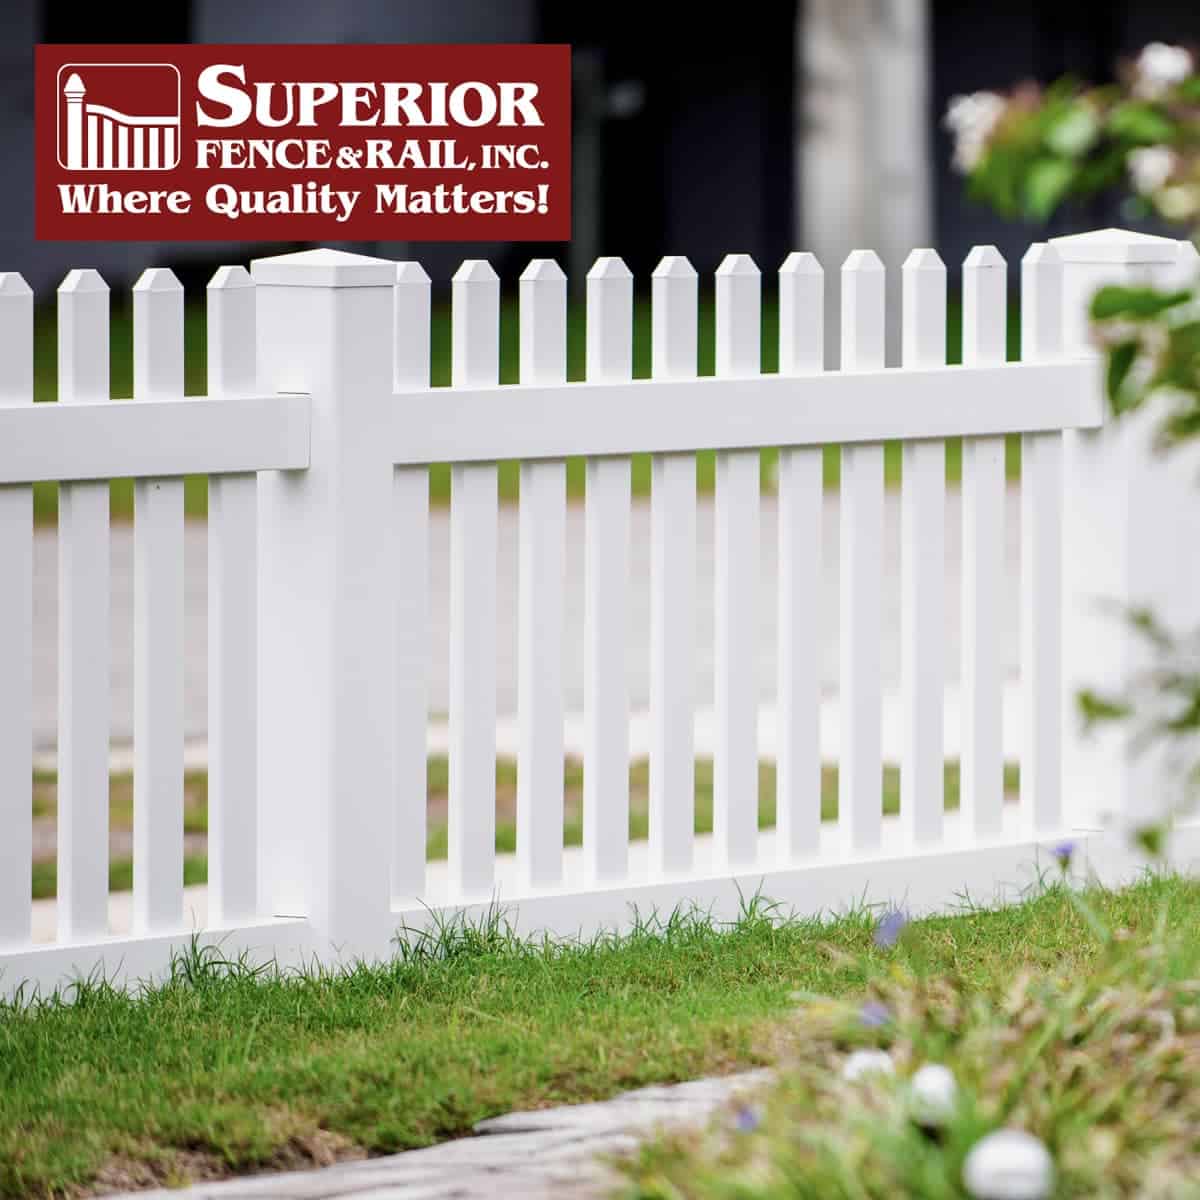 Newport News Fence Company Contractor